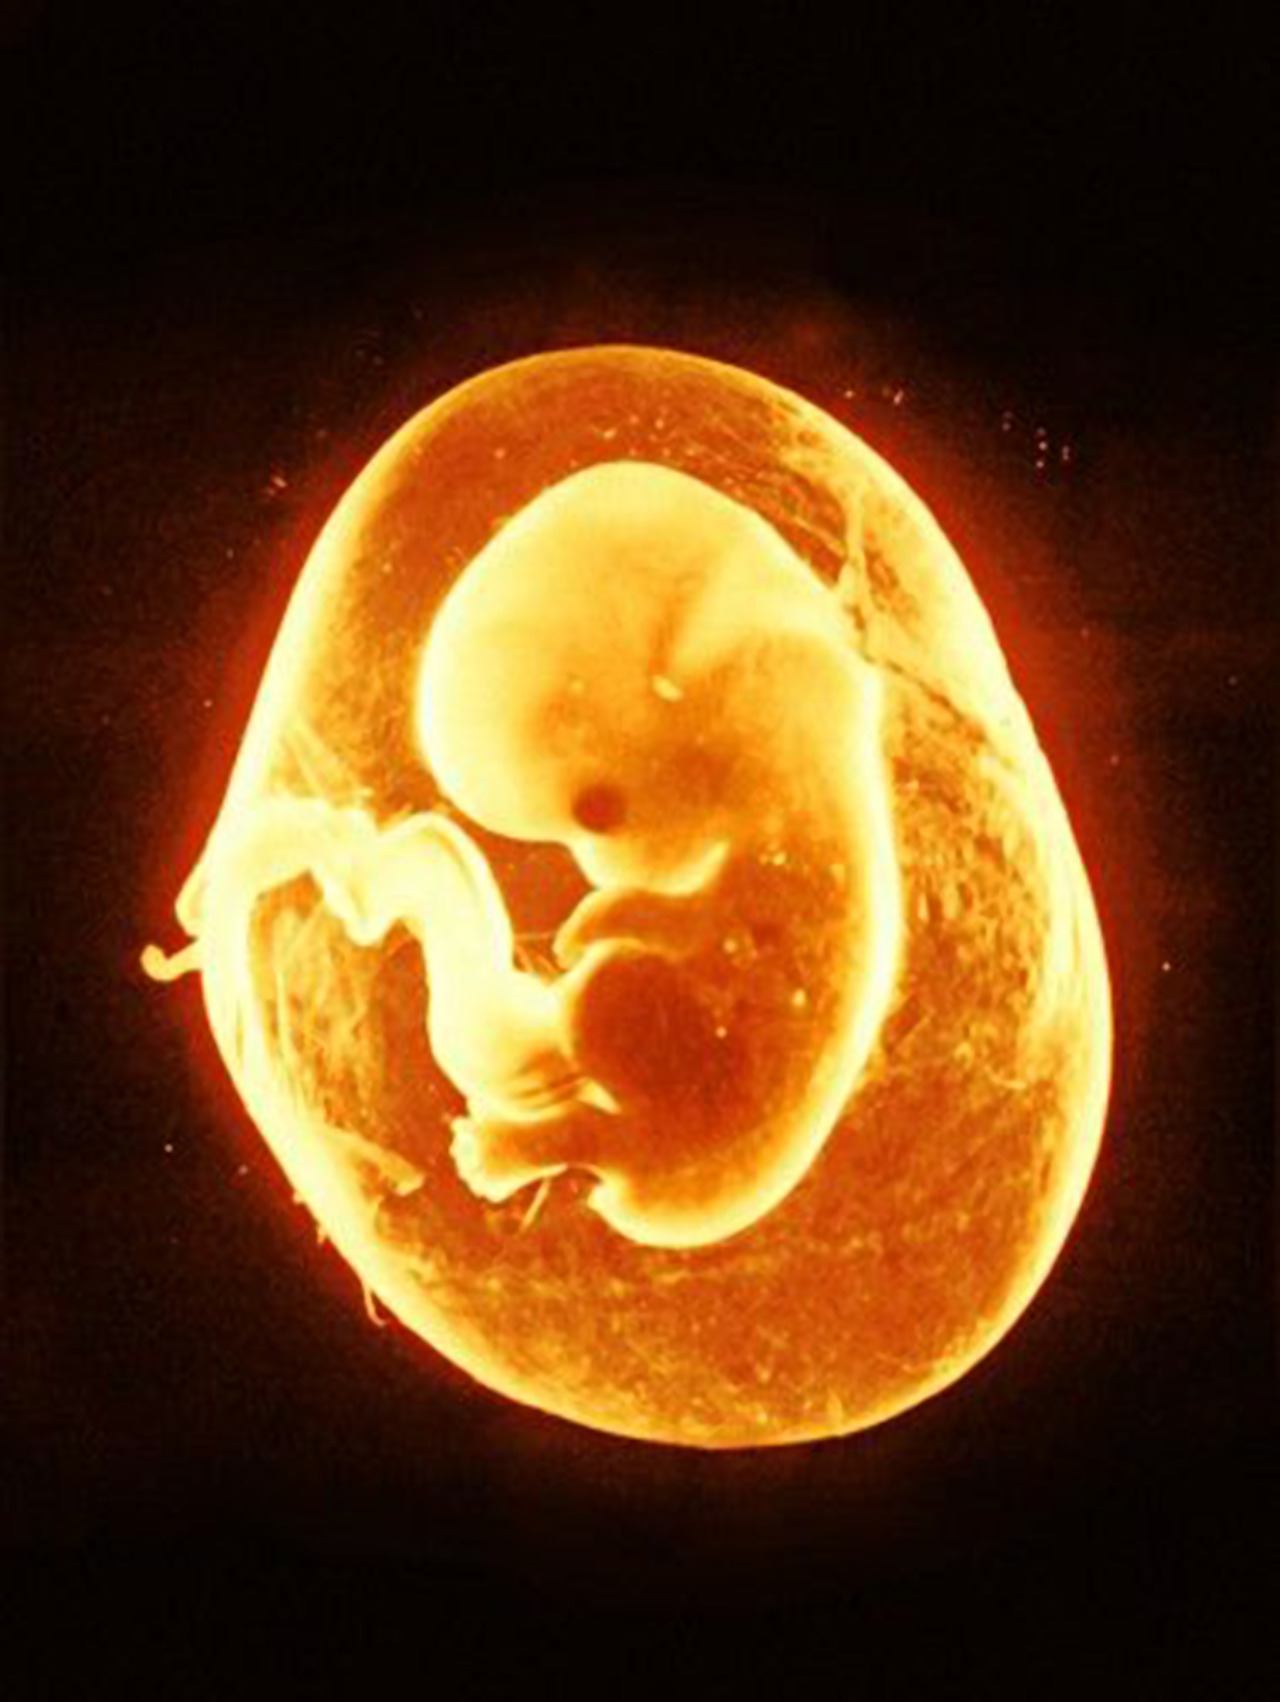 infinity-imagined: âAn eight week old human embryo. â